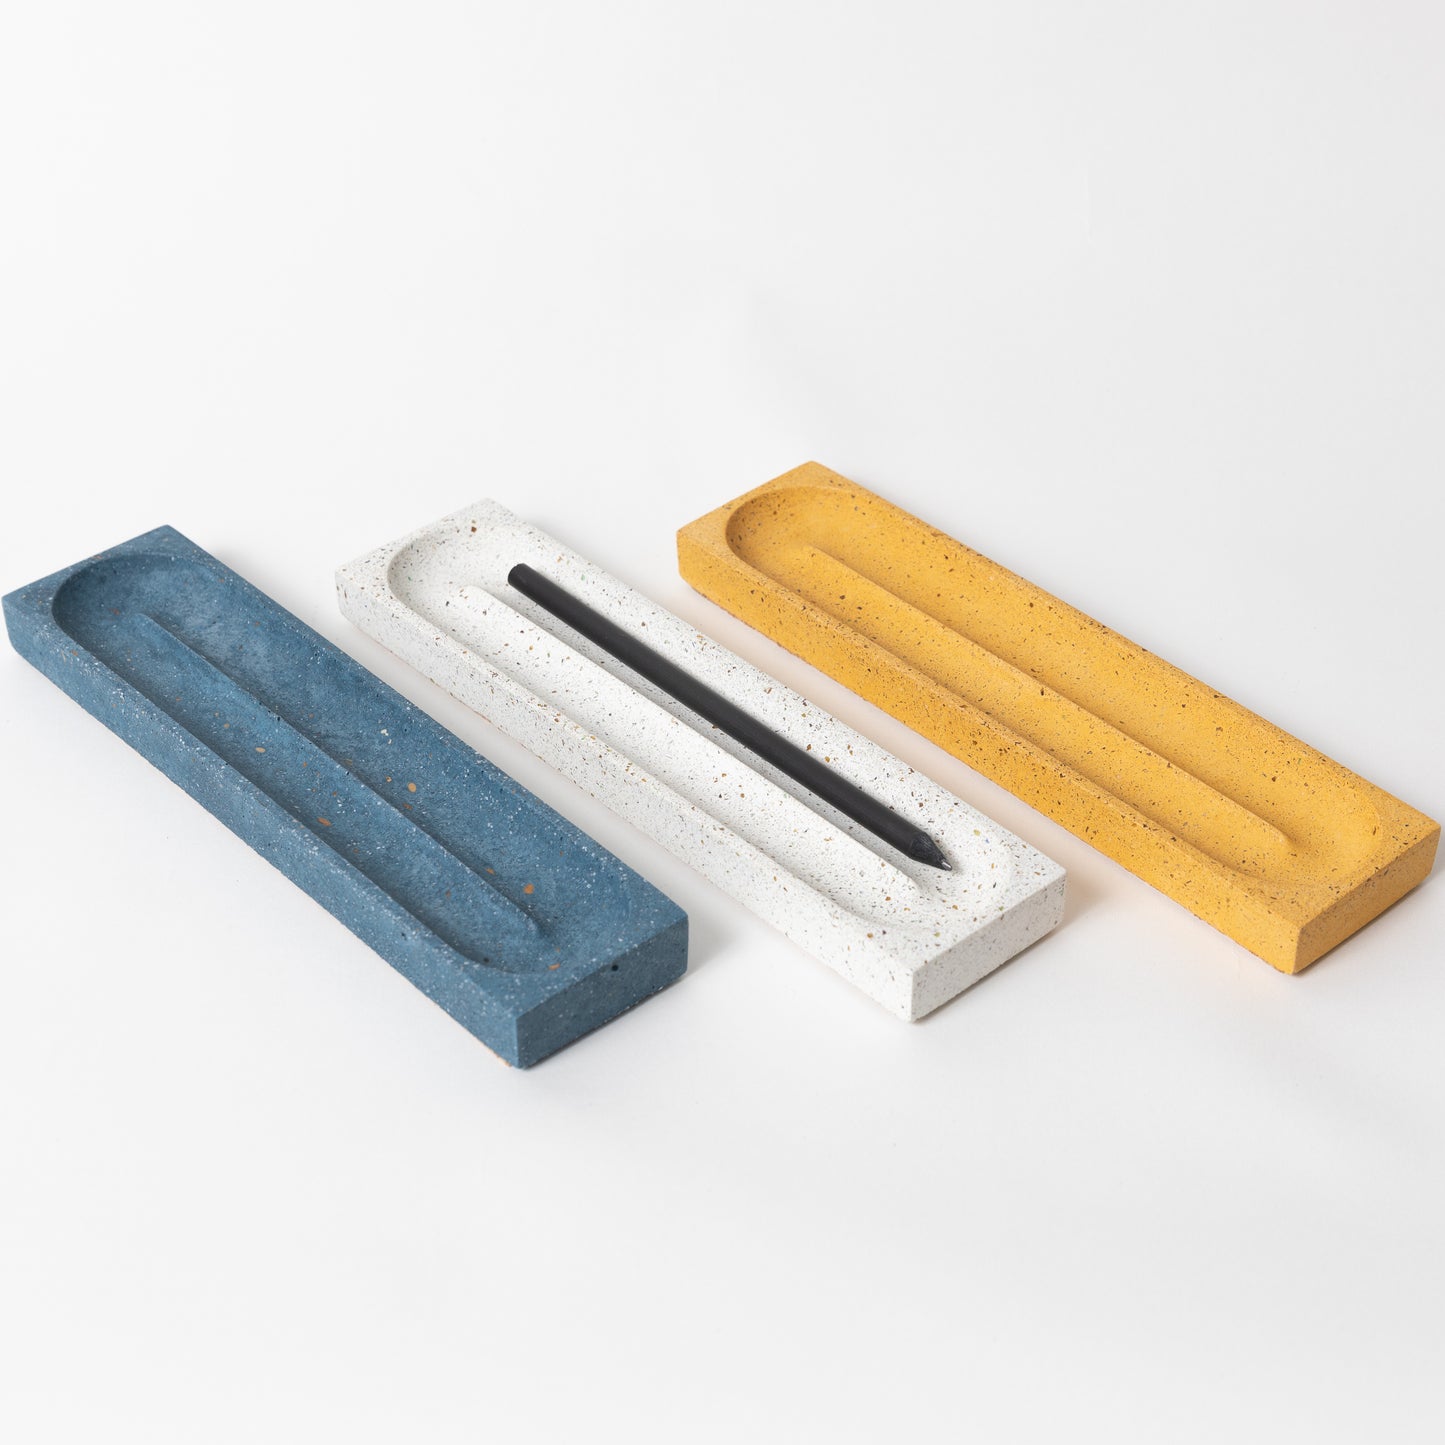 Concrete pencil tray in various terrazzo colors.